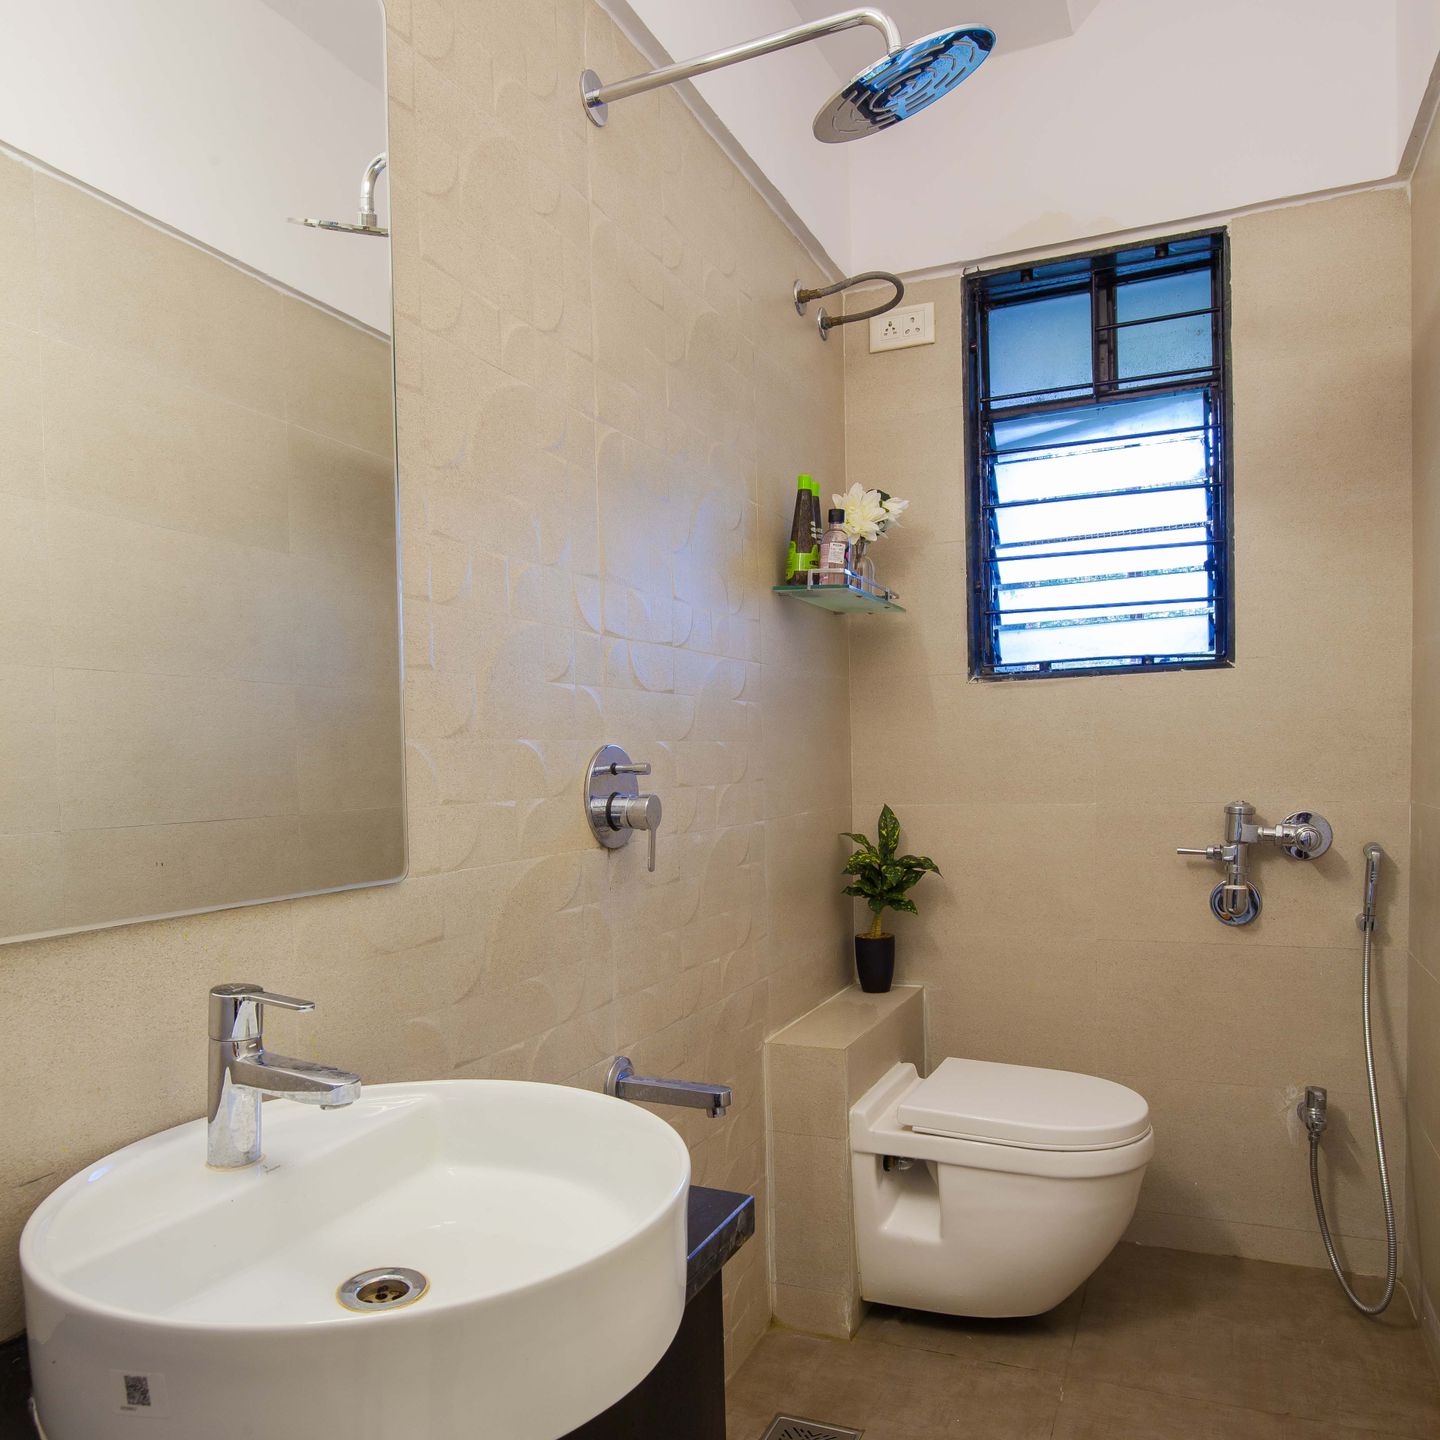 Bathroom Design With Textured Tiles - Livspace